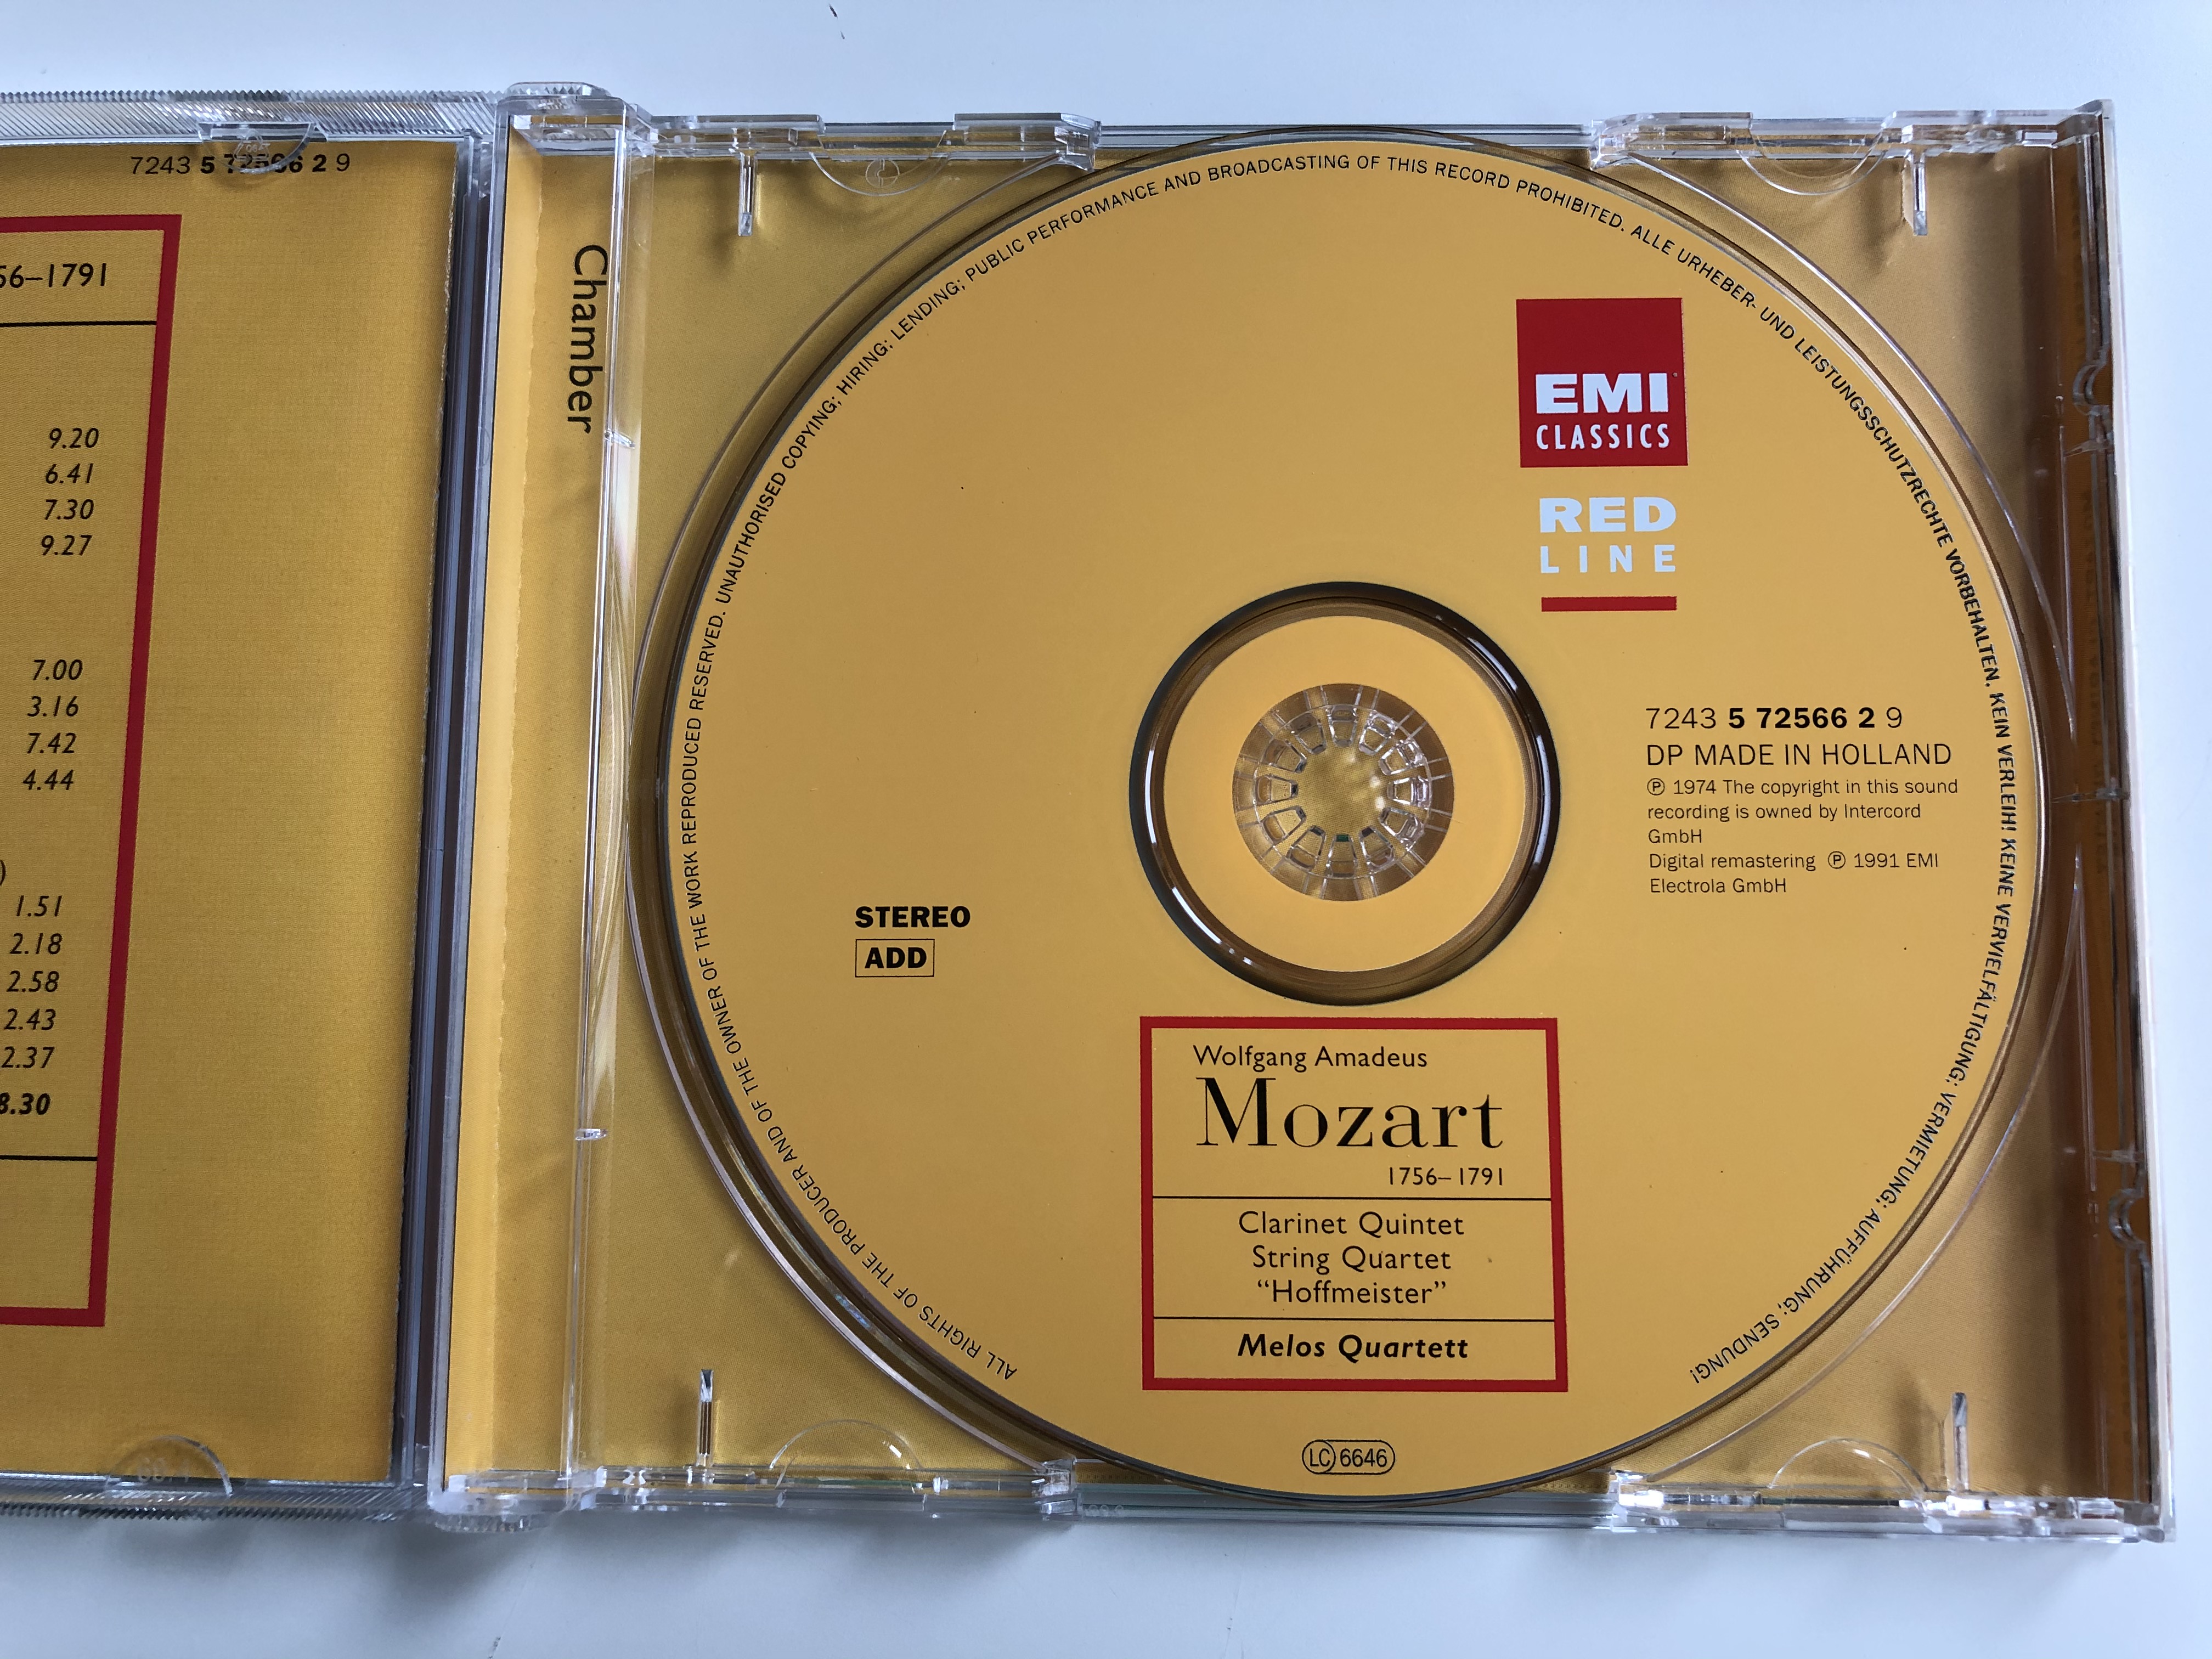 wolfgang-amadeus-mozart-1756-1791-clarinet-quintet-string-quartet-hoffmeister-melos-quartett-red-line-emi-classics-audio-cd-1998-stereo-724357256629-3-.jpg